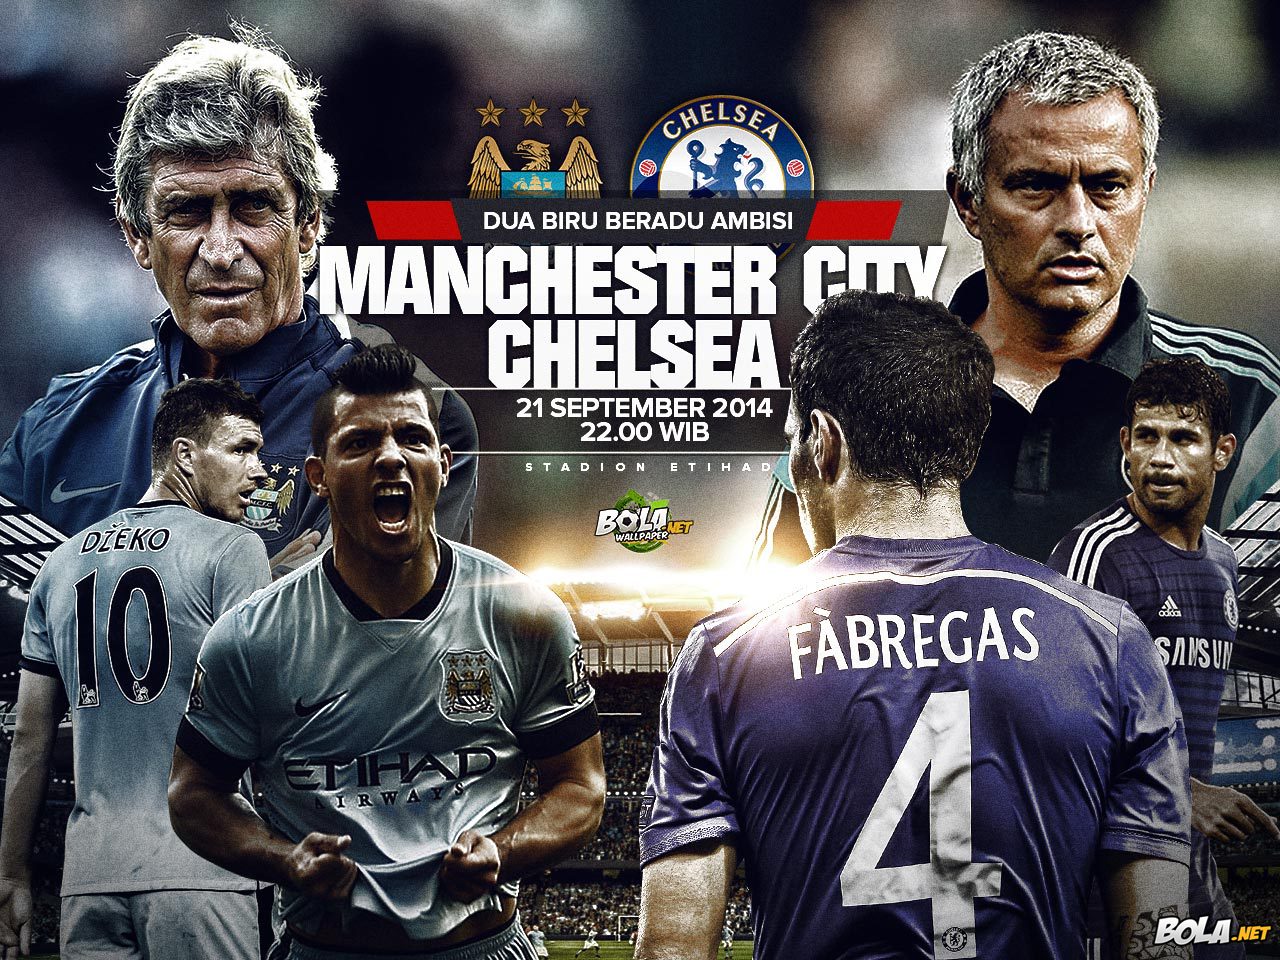 Deskripsi : Wallpaper Manchester City Vs Chelsea, size: 1280x960